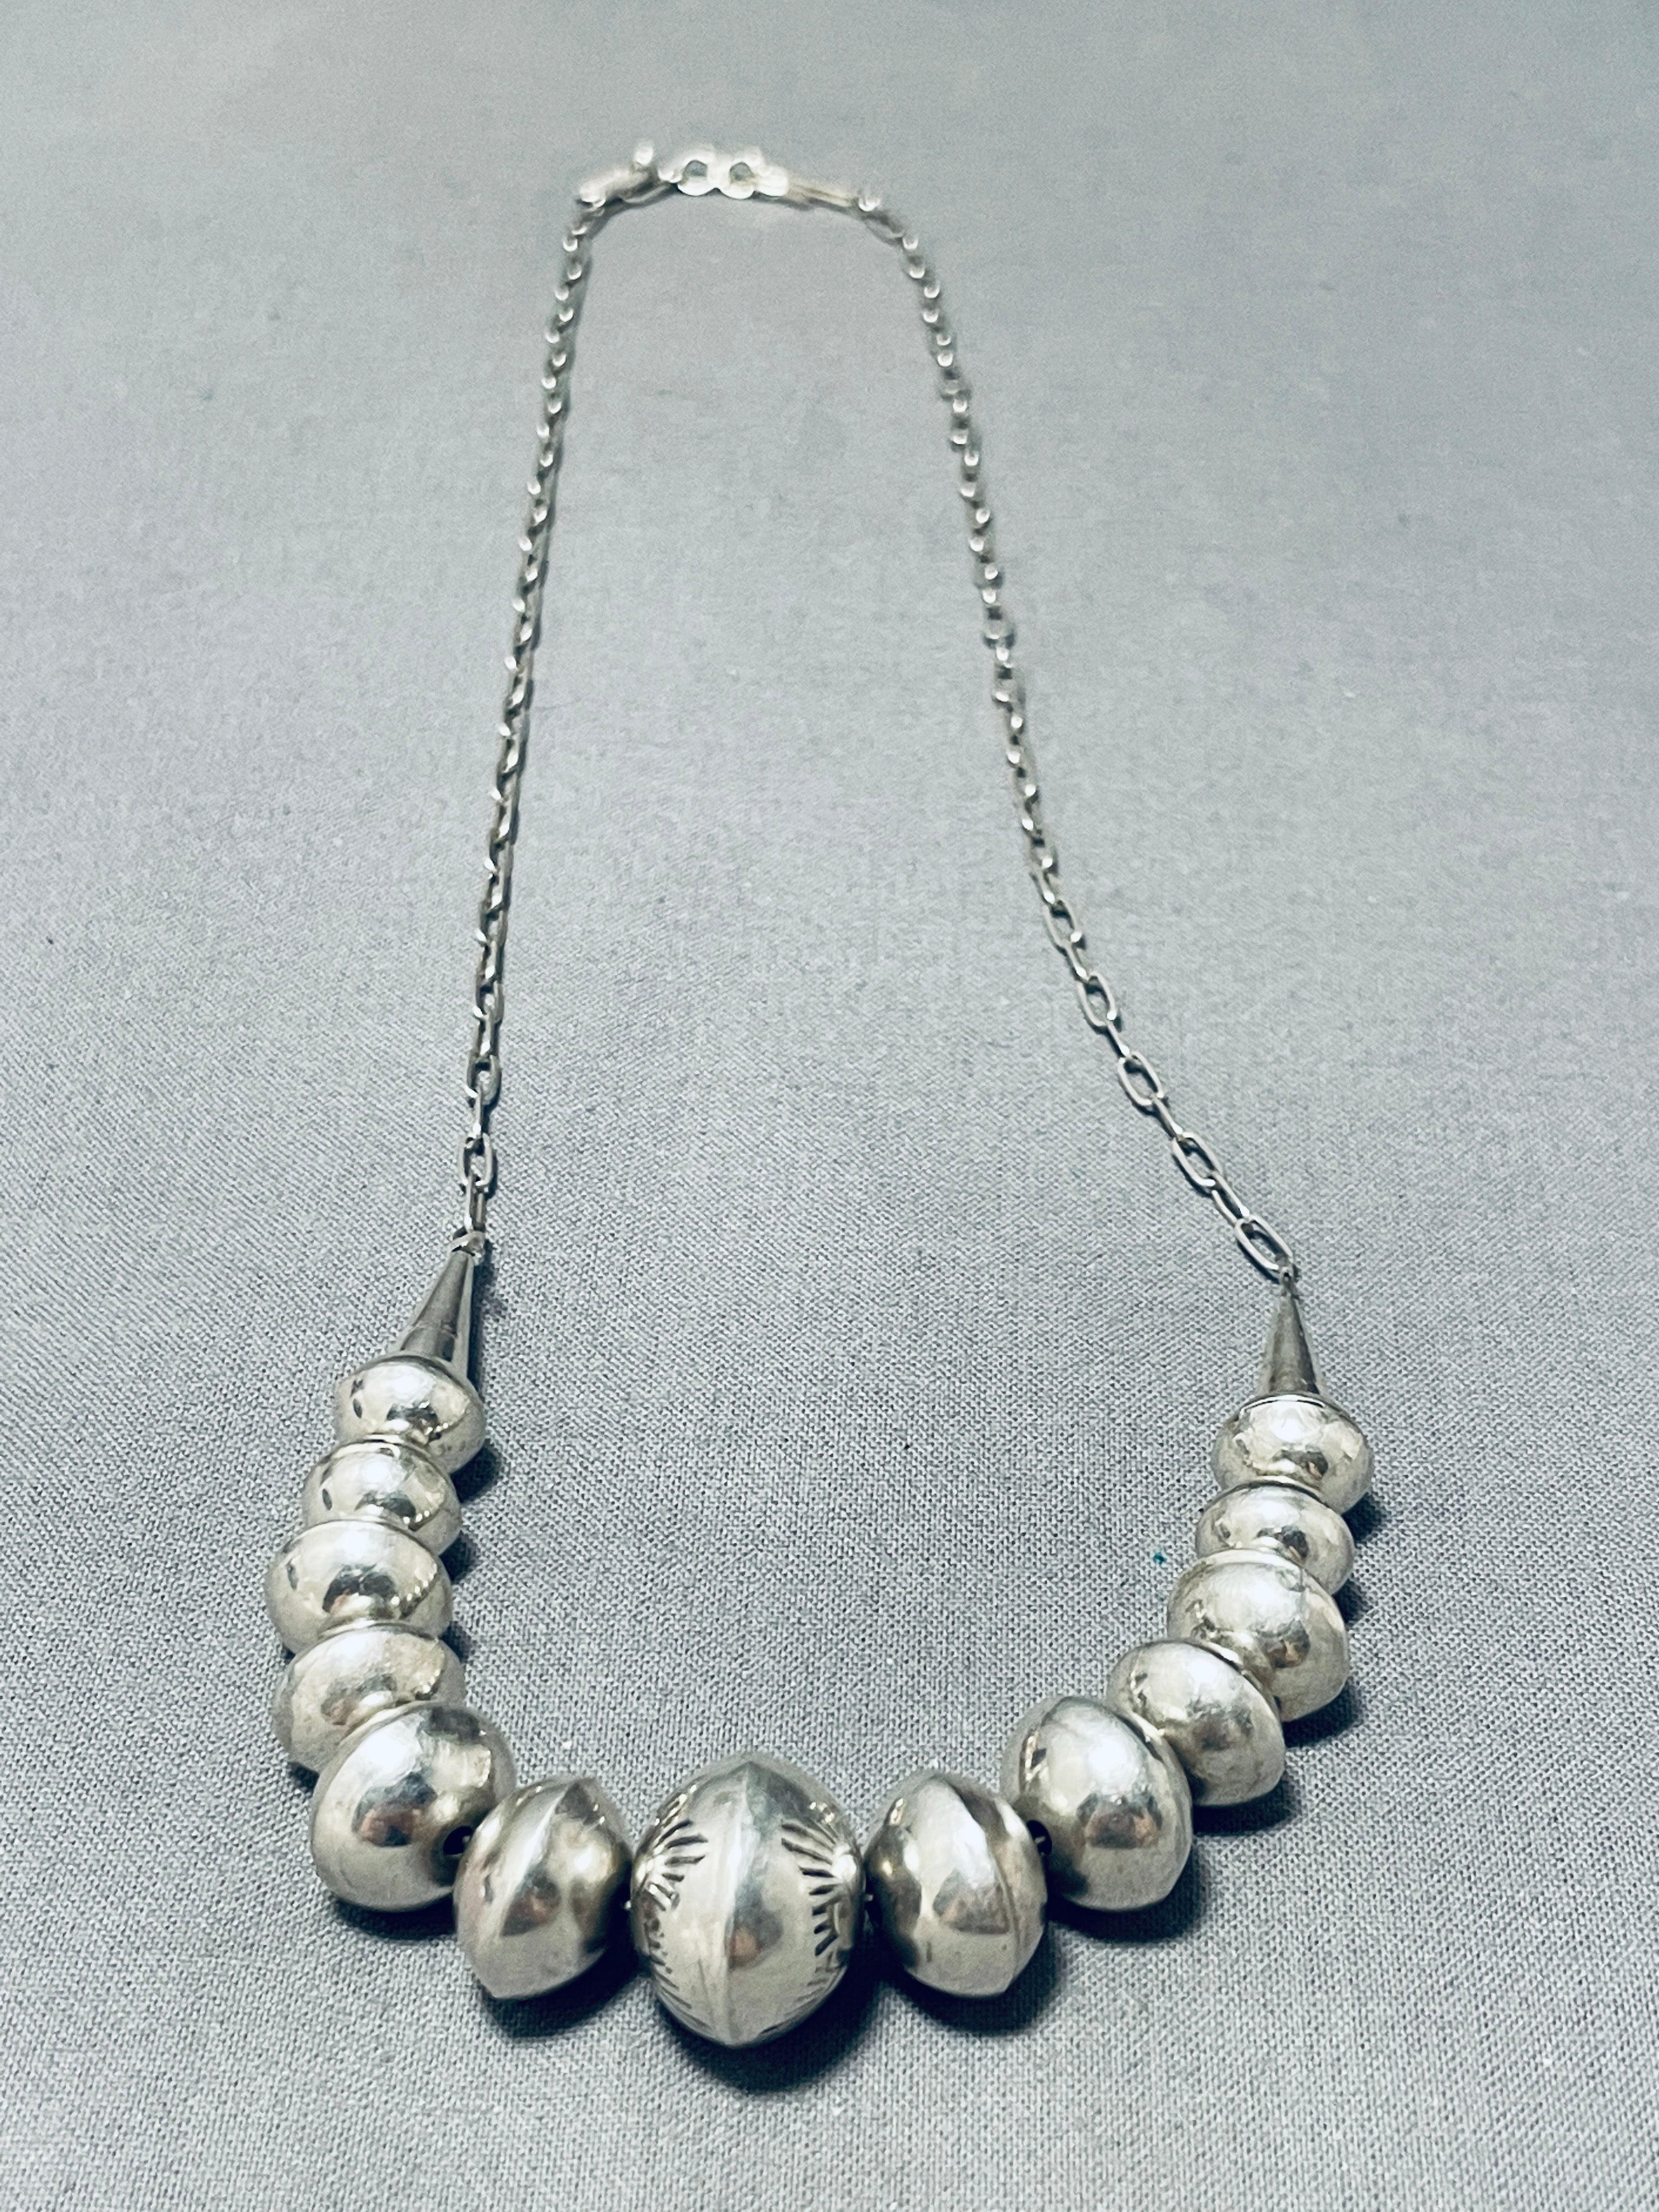 Vintage handmade Sterling Silver Chain & Bead Bracelet